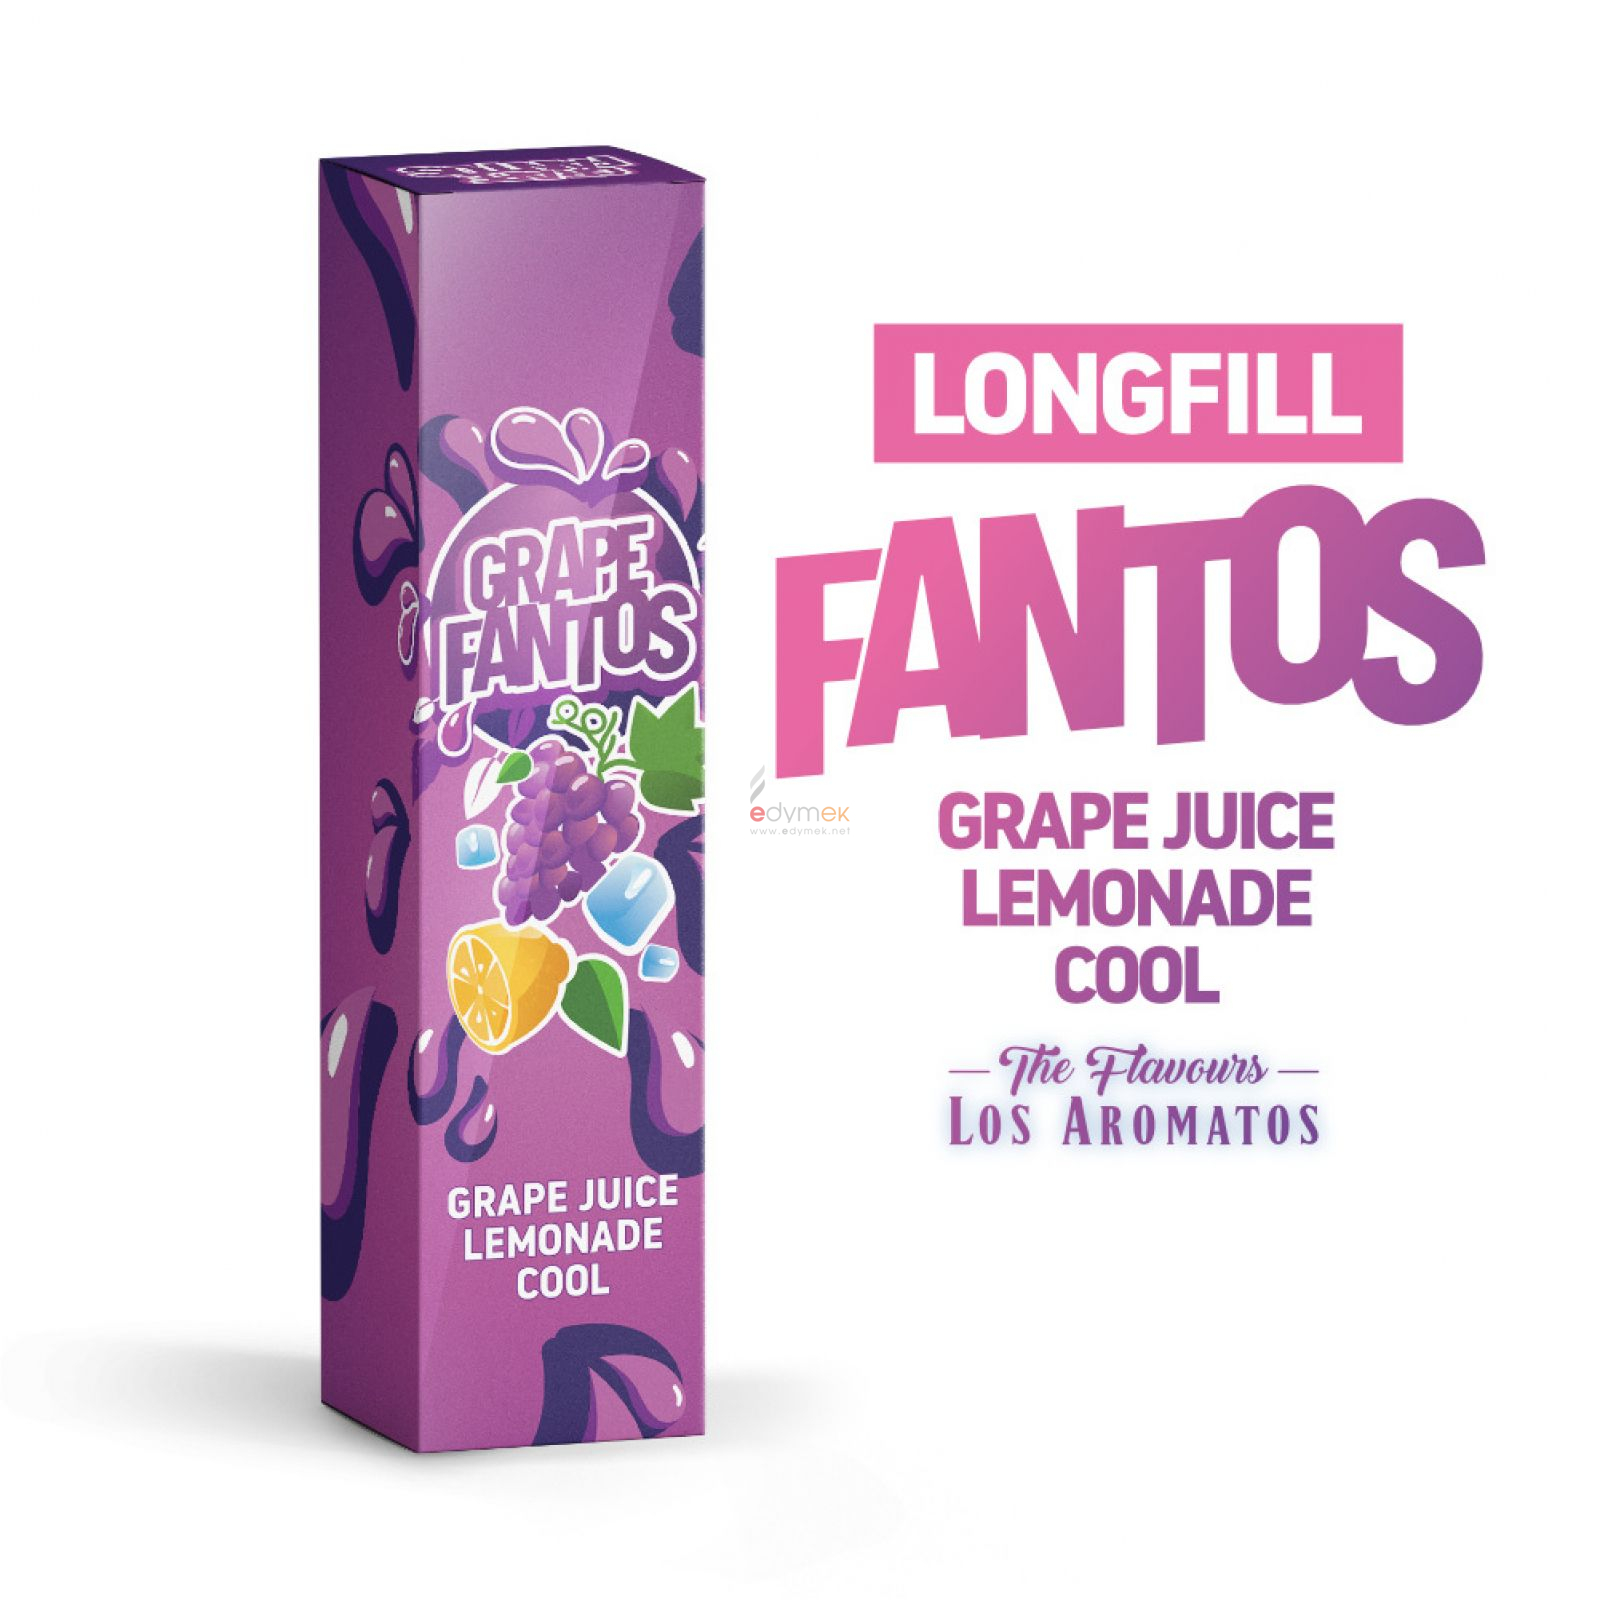 longfill-fantos-koncentrat-9ml-grape-fantos-de88f8208dd34e8eb230ad10964297a4-f9e3710a.jpg